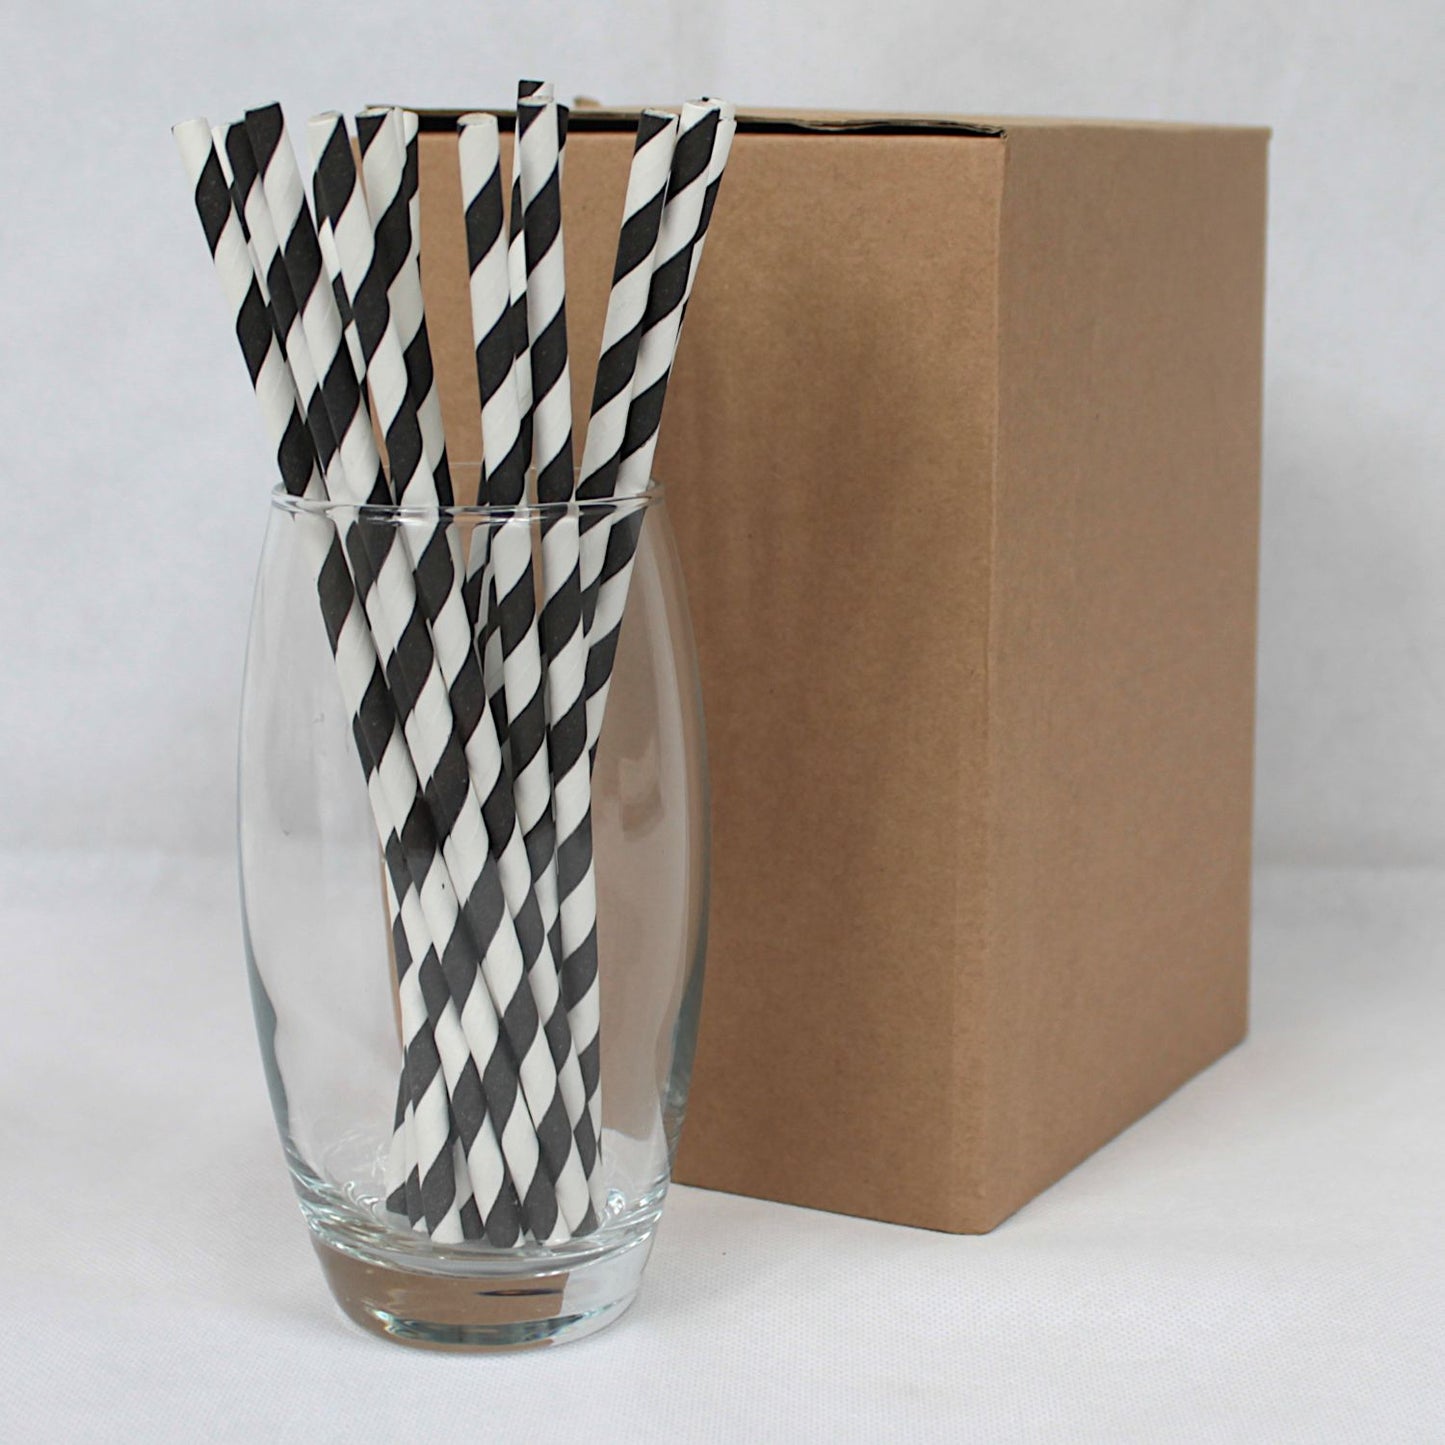 Black & White Striped Paper Straws (6mm x 200mm) - Intrinsic Paper Straws